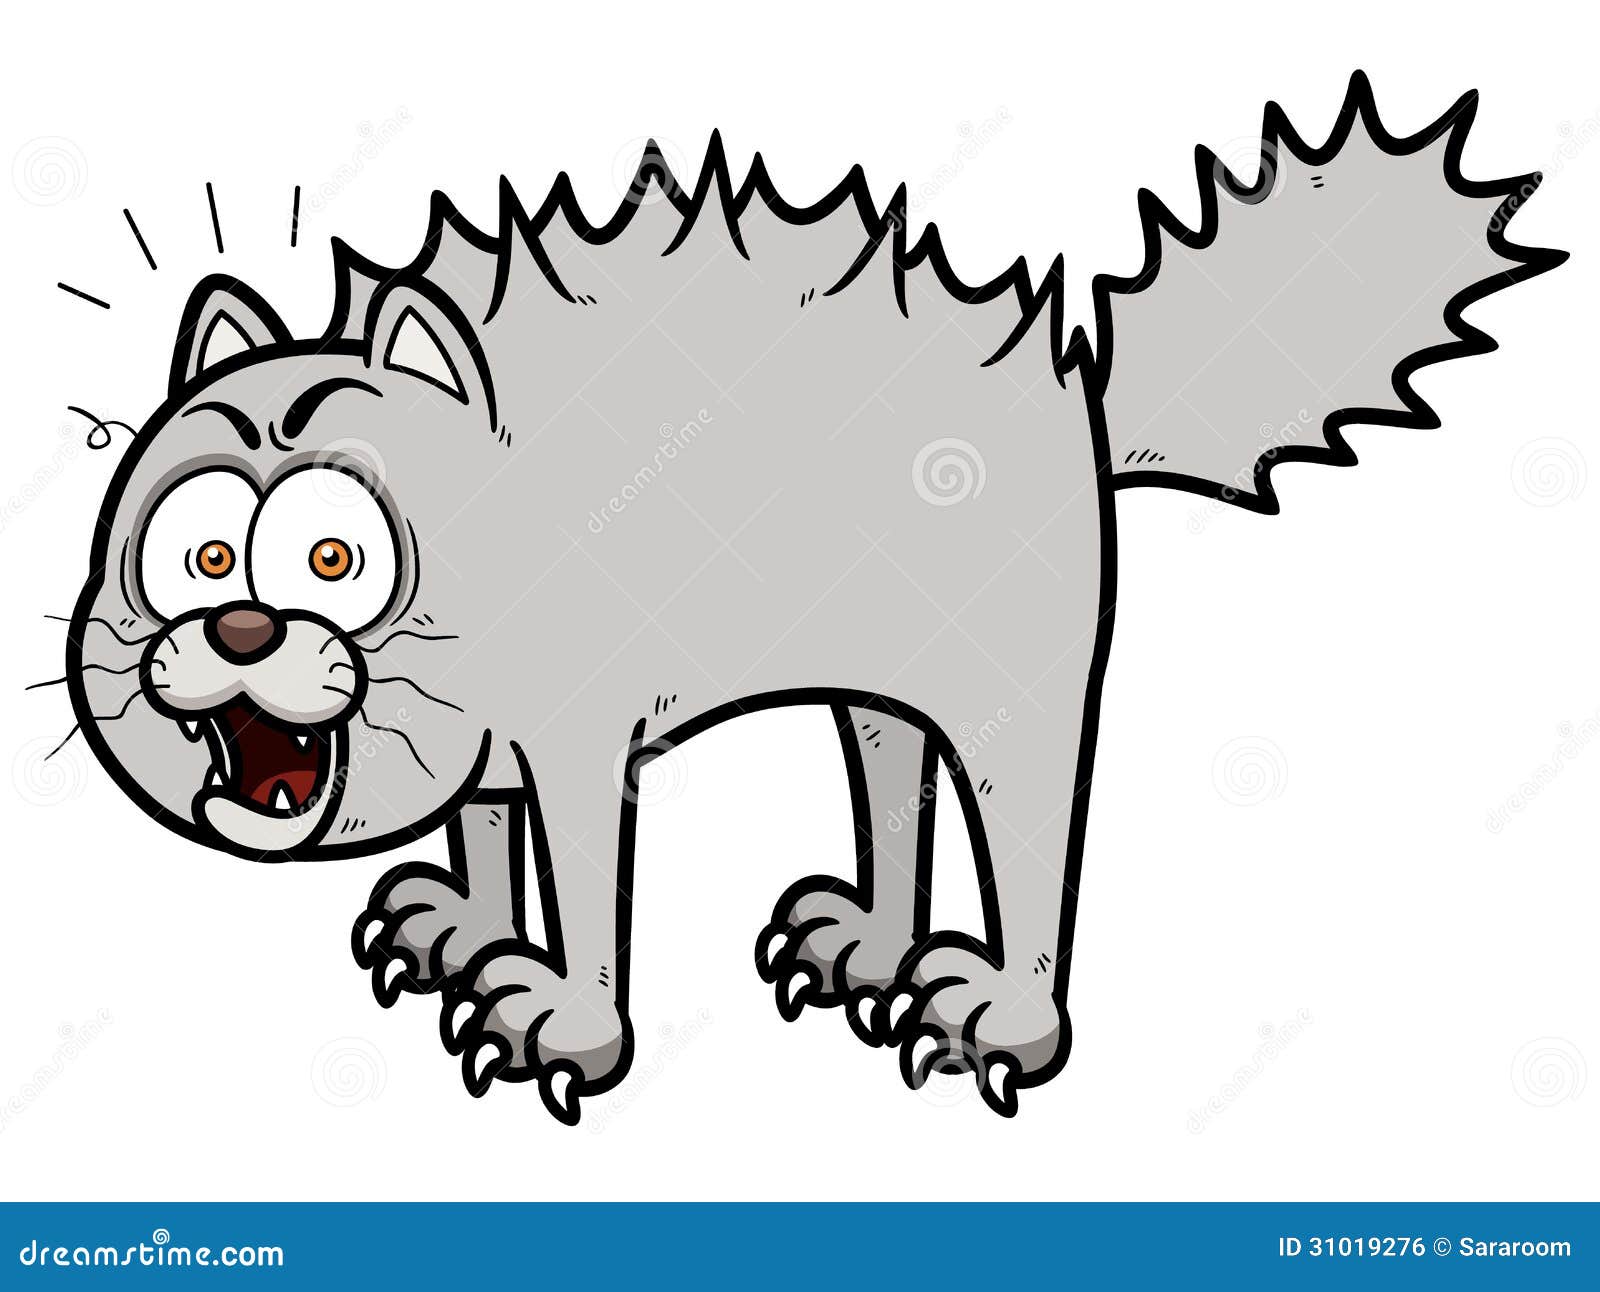 Scared cartoon cat stock vector. Illustration of humor - 31019276